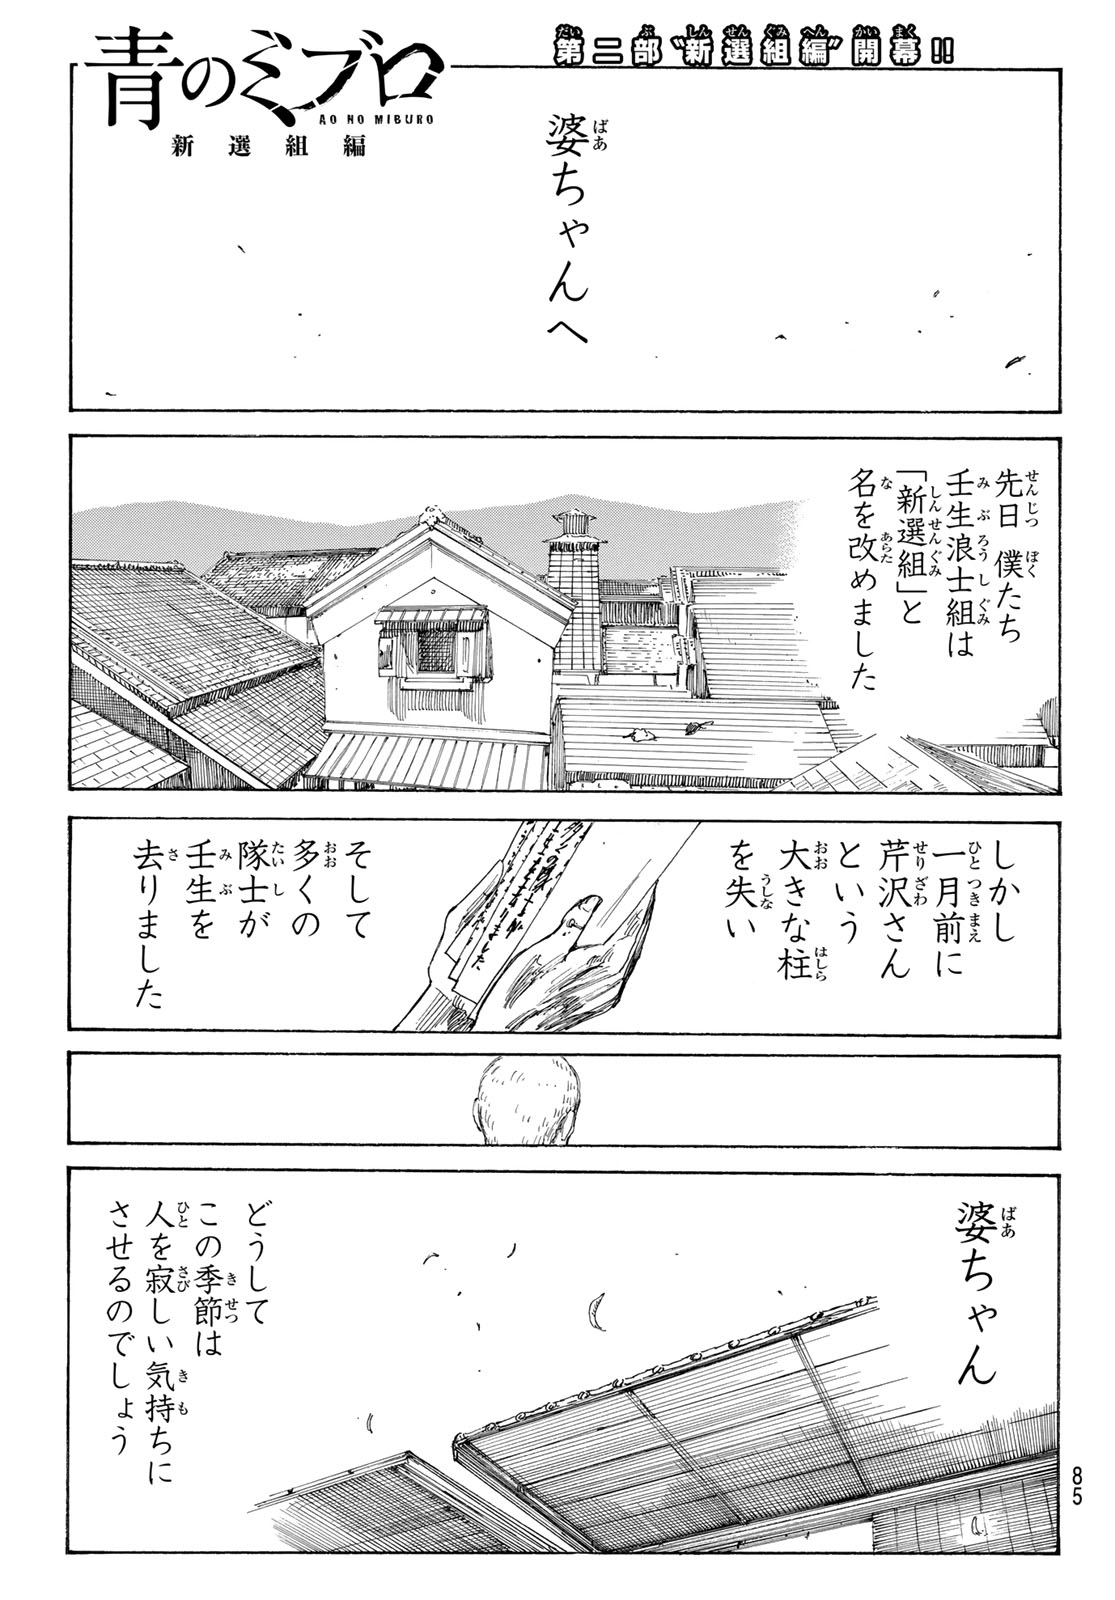 Ao no Miburo - Chapter 123 - Page 2